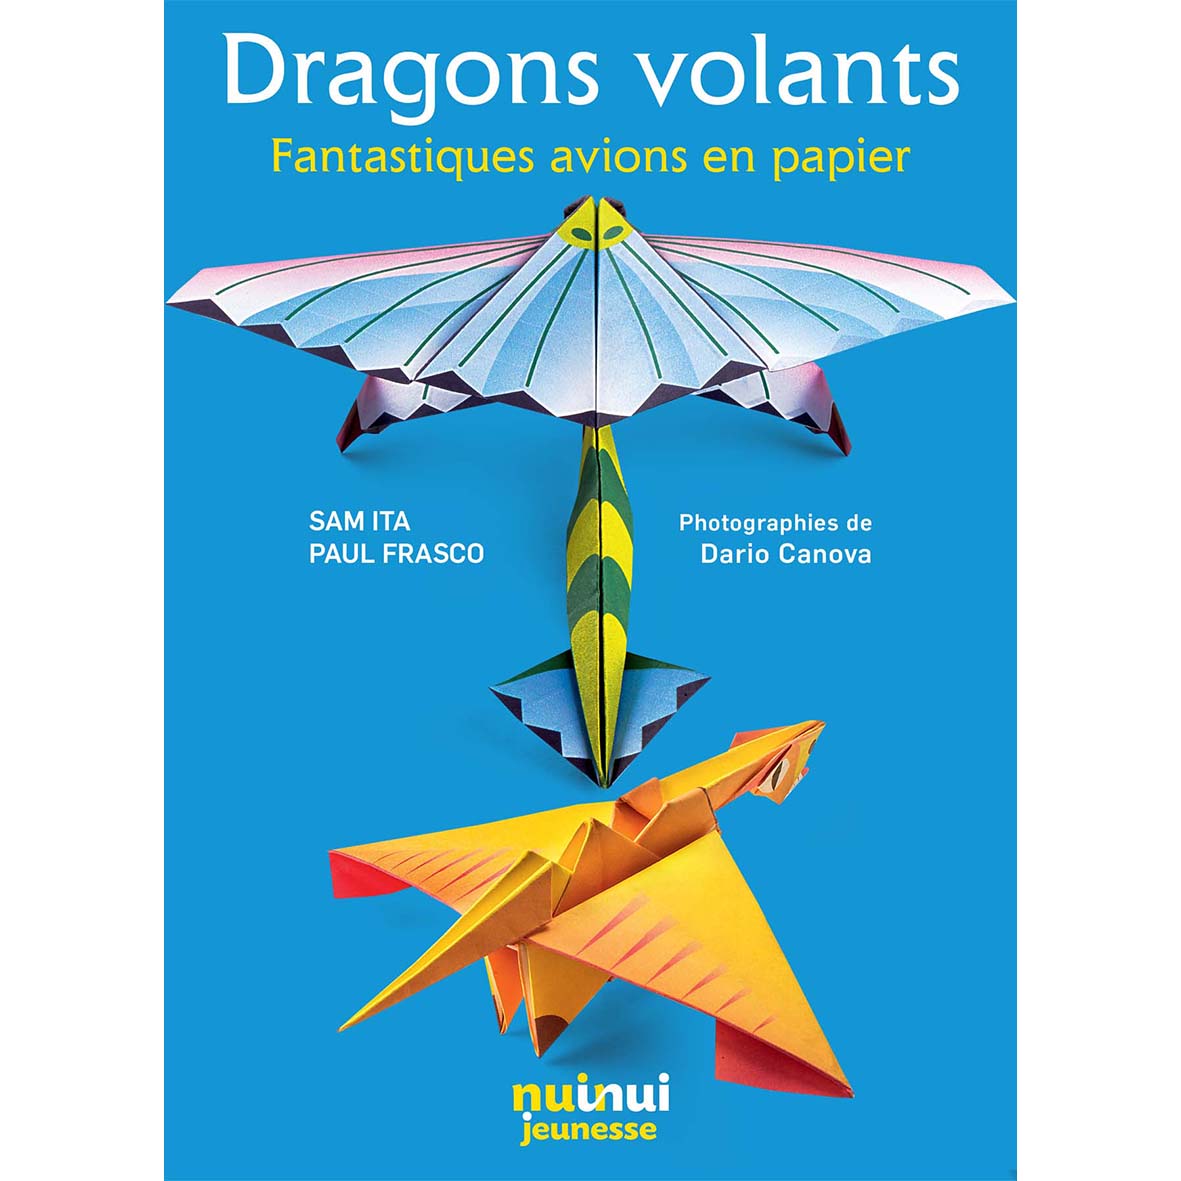 Dragons volants - Fantastiques avions en papier